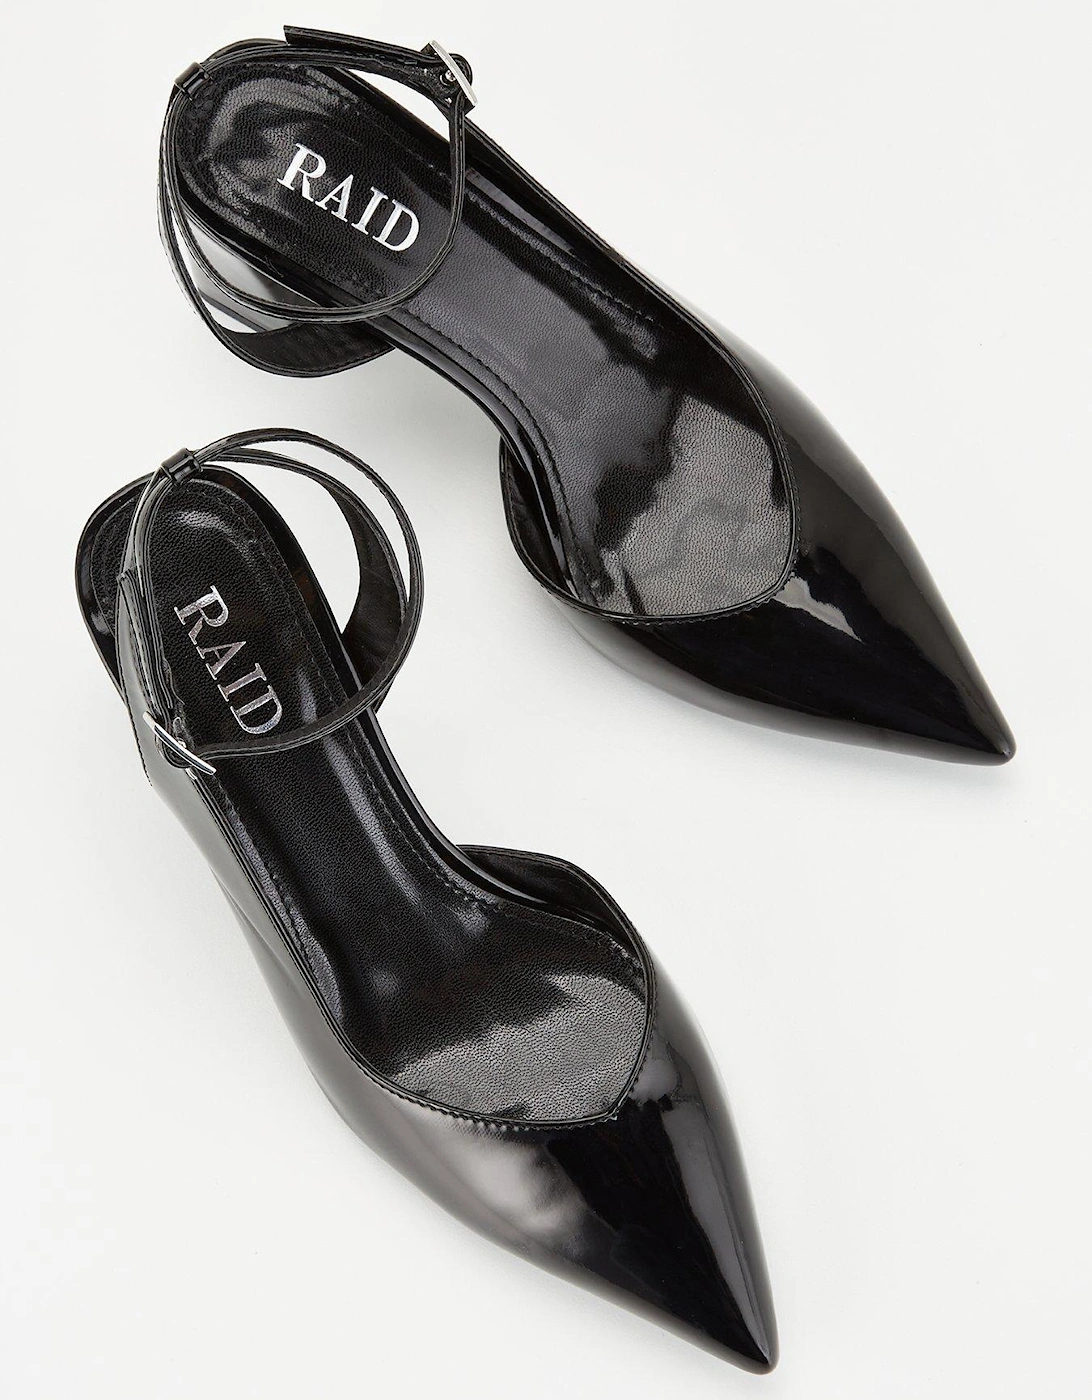 Alaia Pointed Front Block Heel Sandal - Black